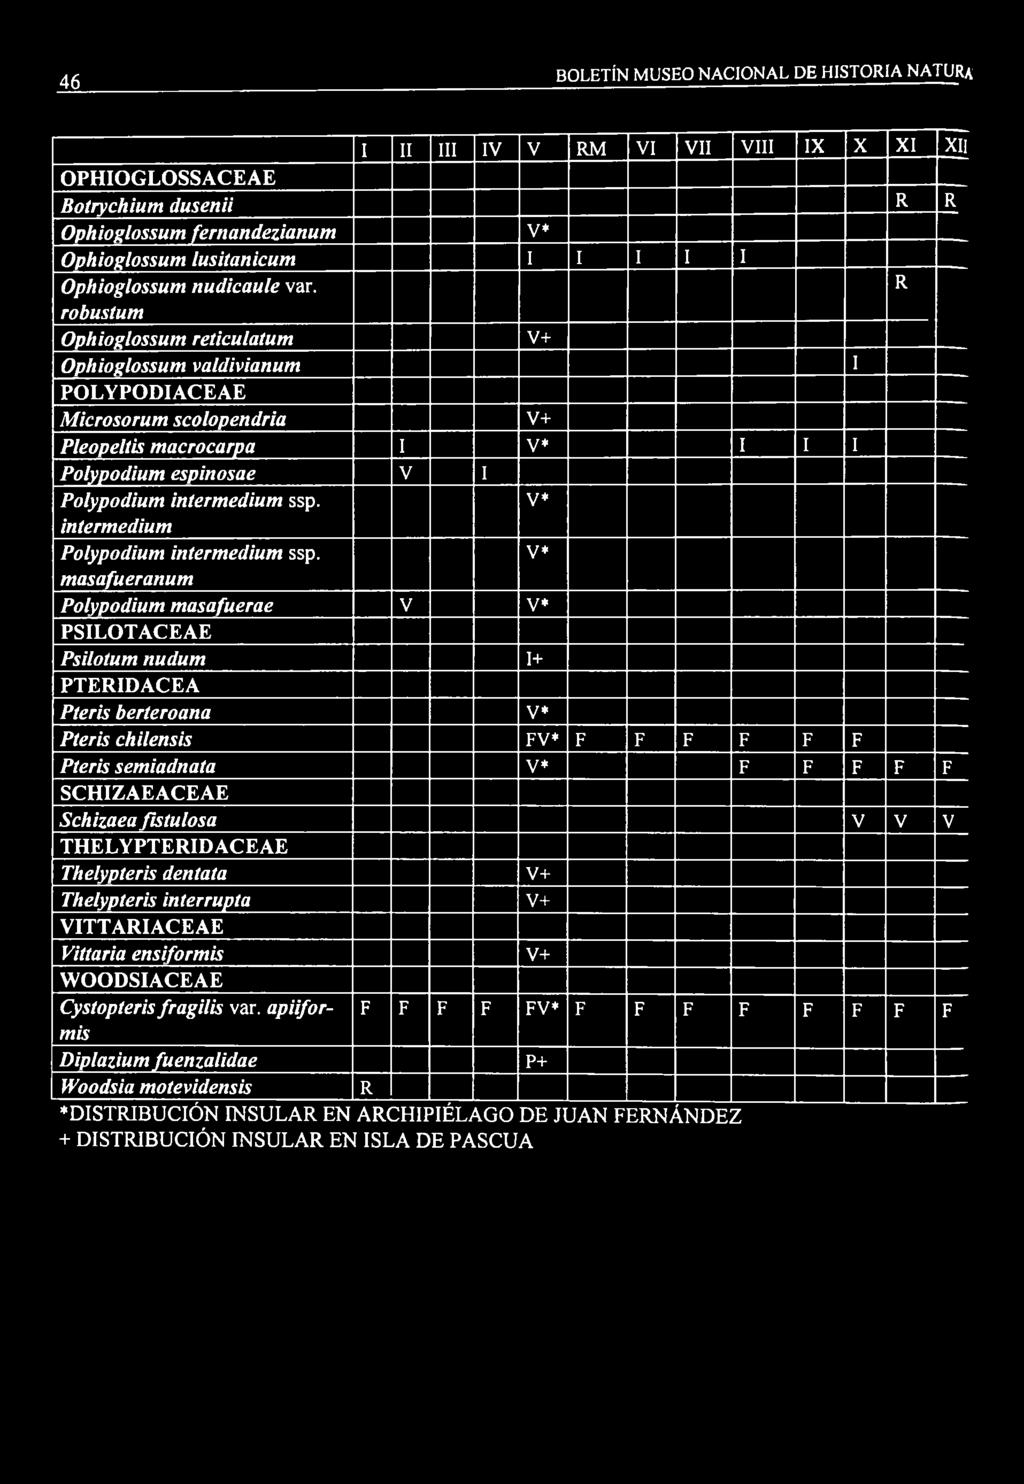 R robustum Ophioglossum reticulatum v+ Ophioglossum valdivianum I POLY PO D IACEAE M icrosorum scolopendria v + Pleopellis macrocarpa I V* I I I Polypodium espinosae V I Polypodium intermedium ssp.